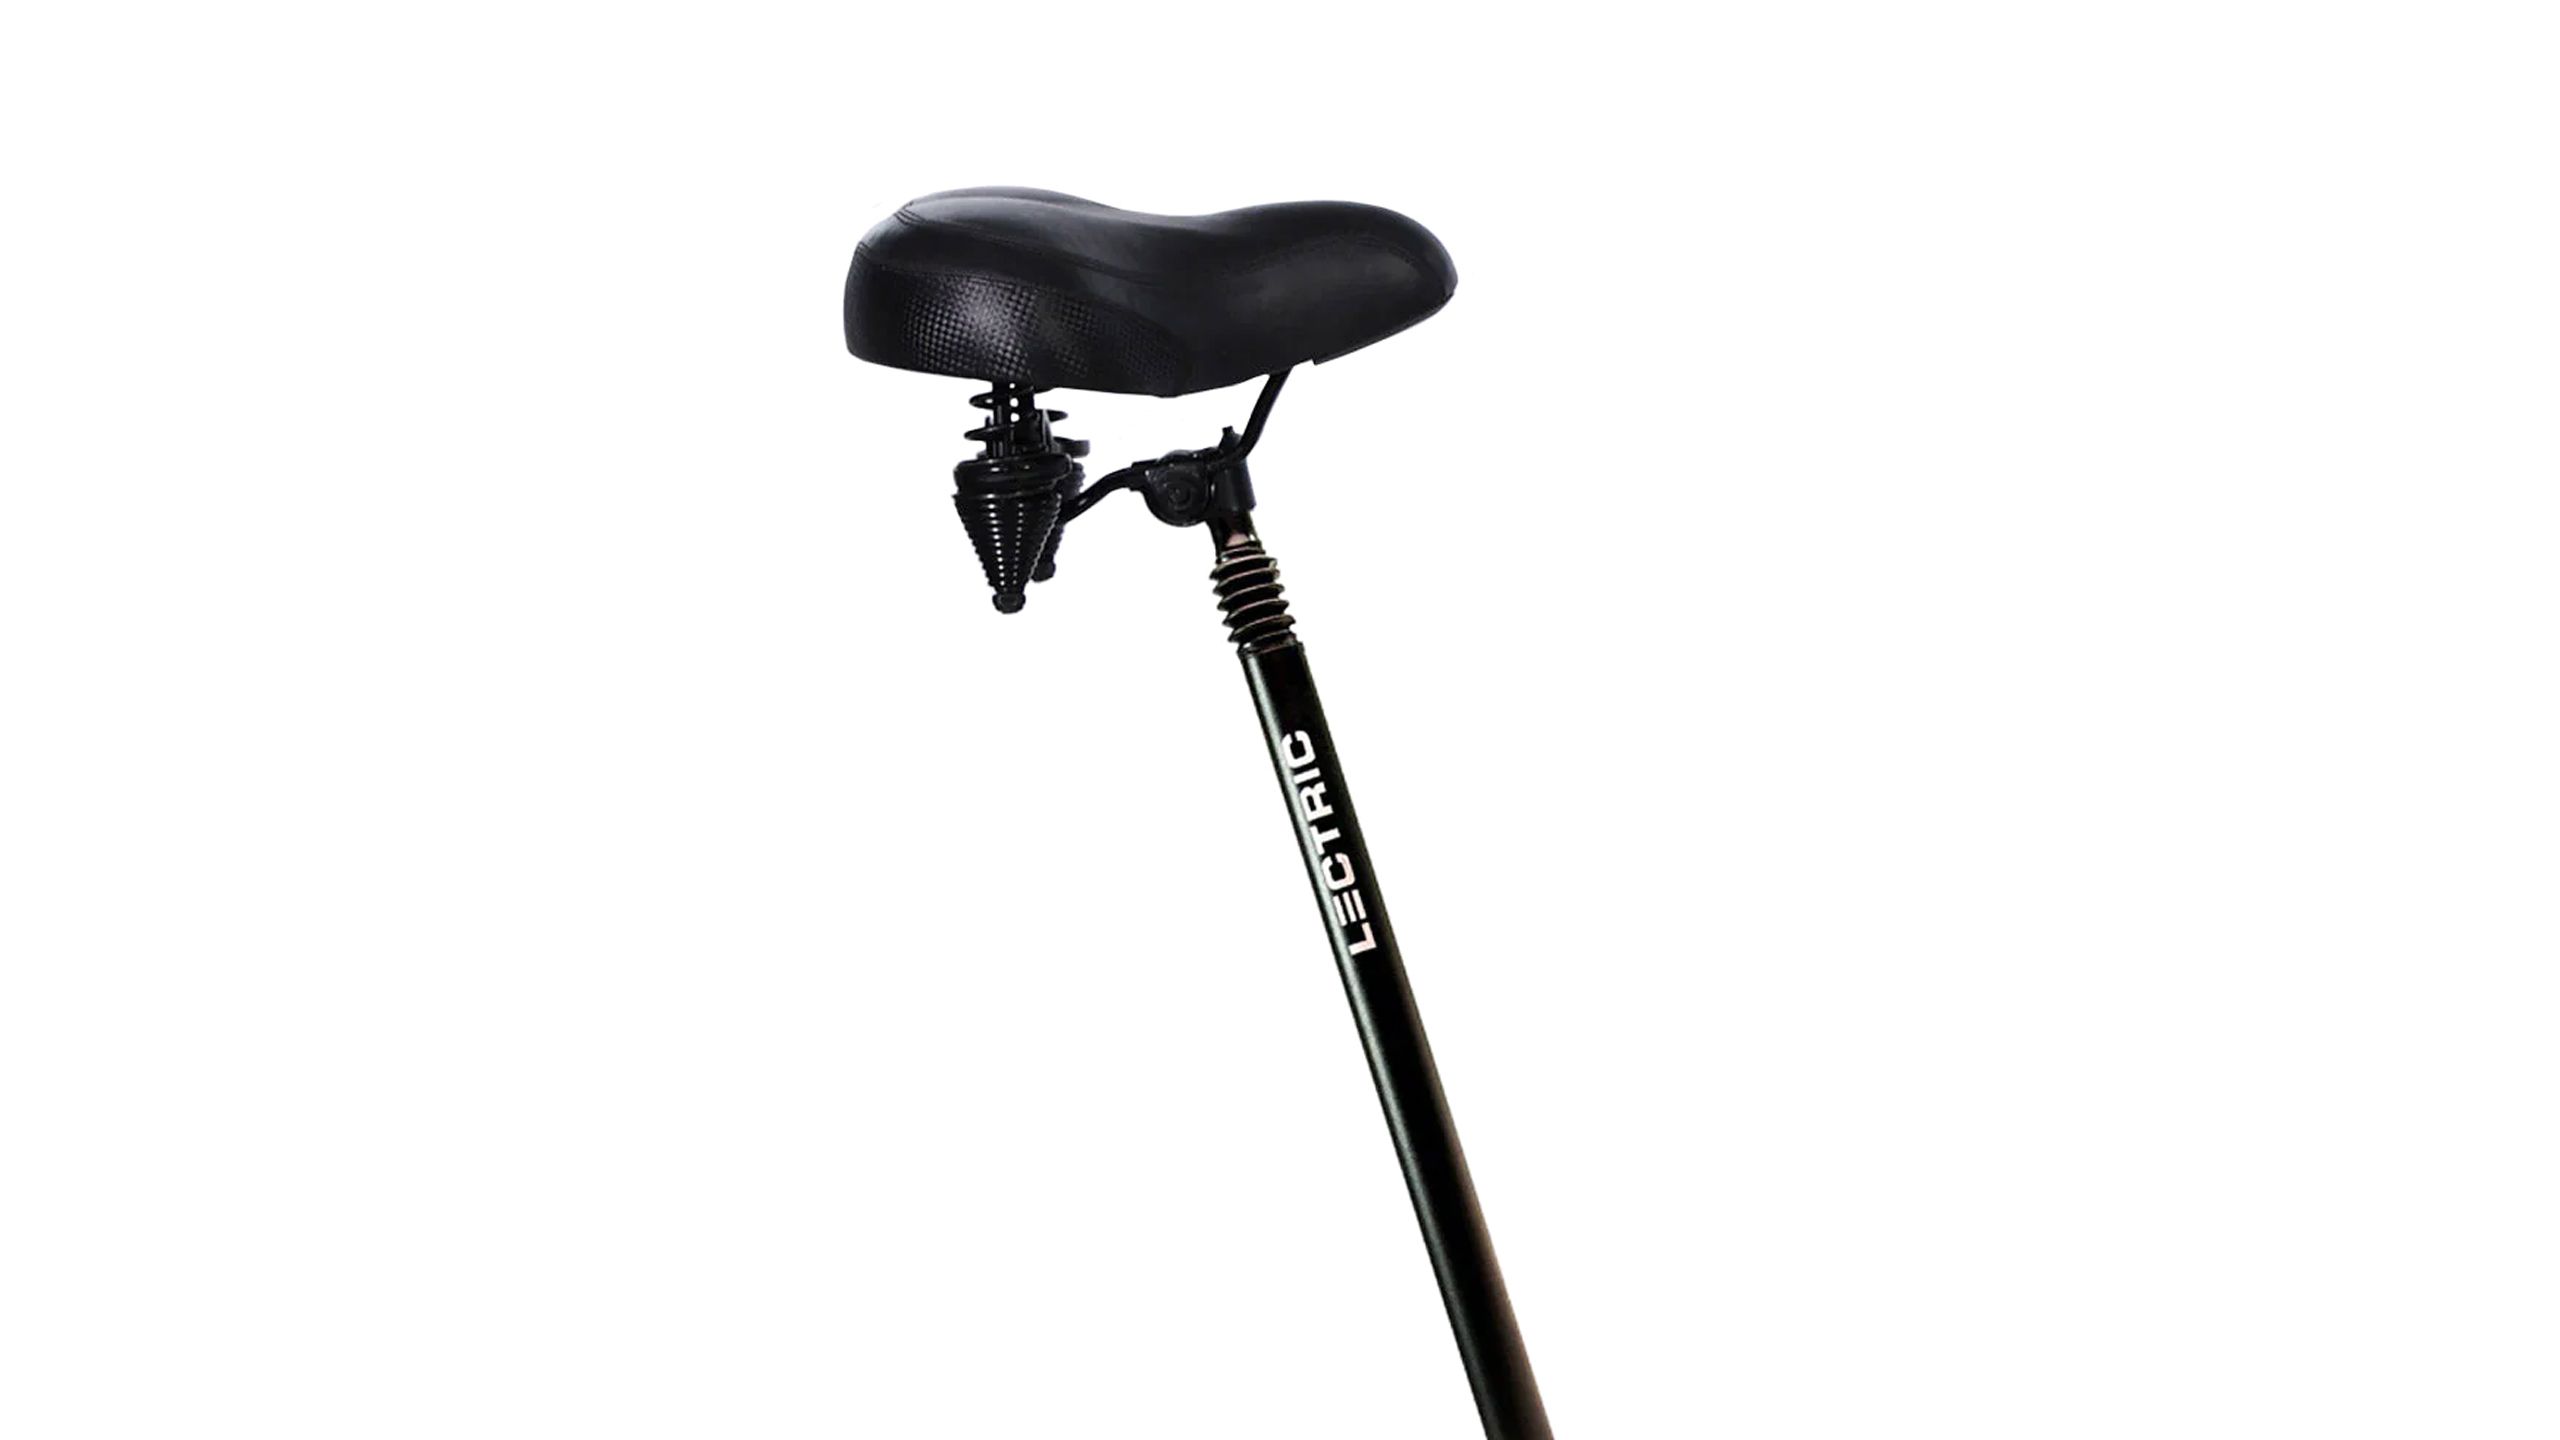 A Lectric suspension bike seat.